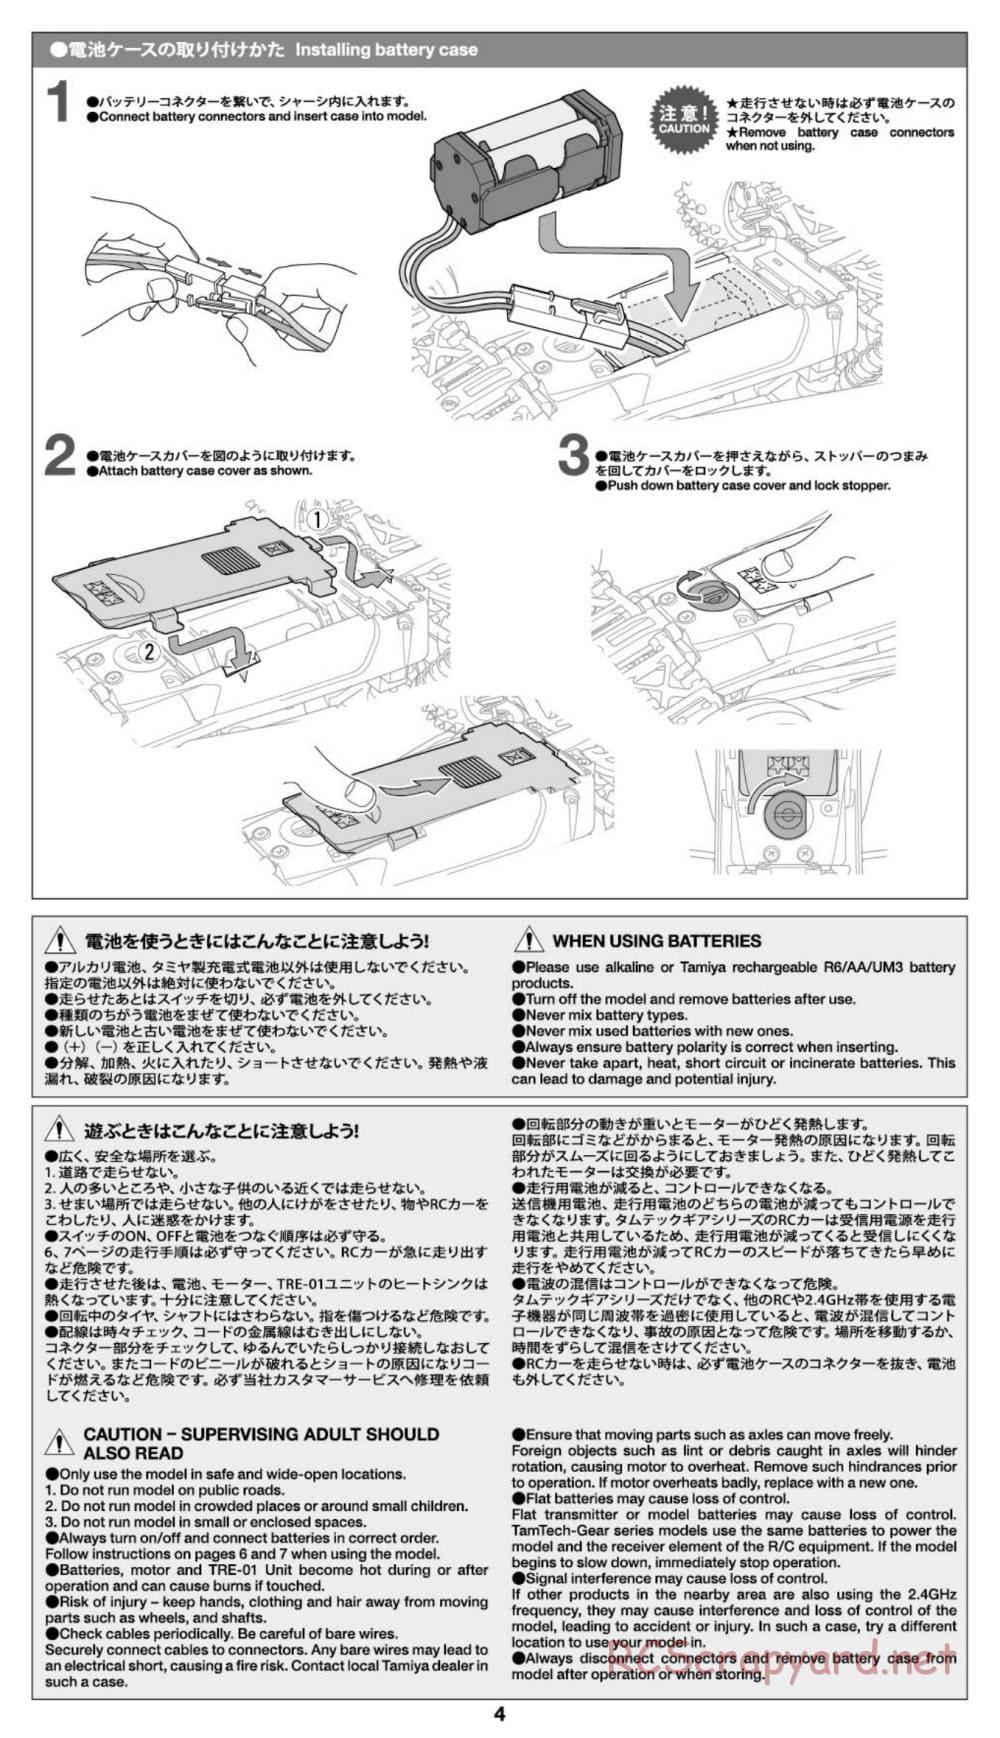 Tamiya - GB-01S Chassis - Manual - Page 4